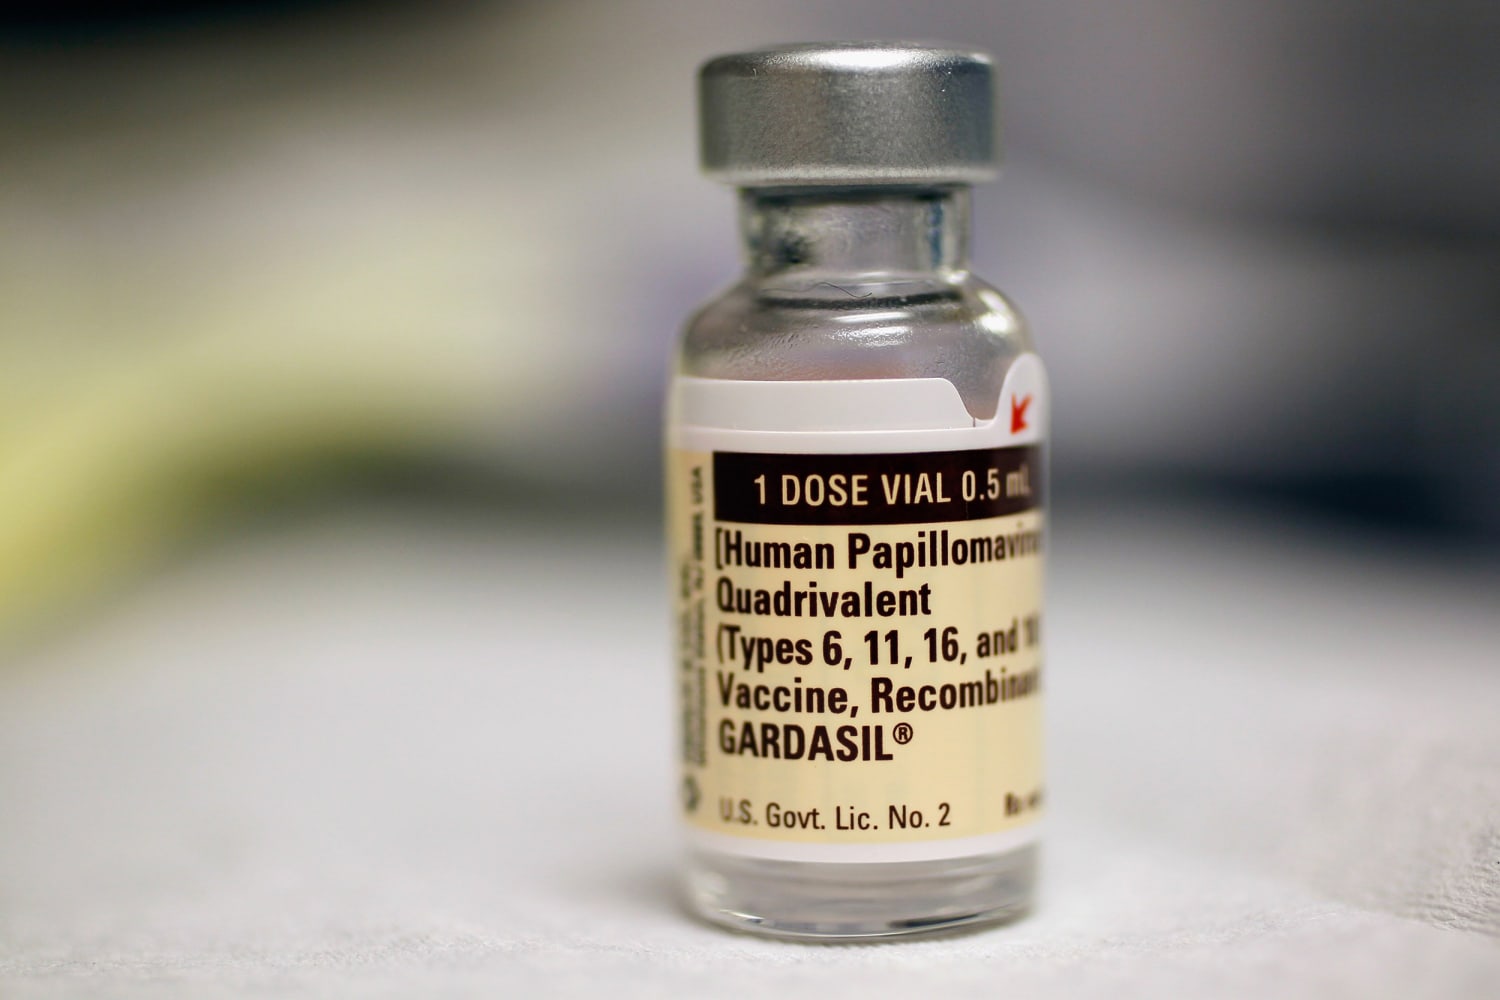 Gardasil vaccine for males